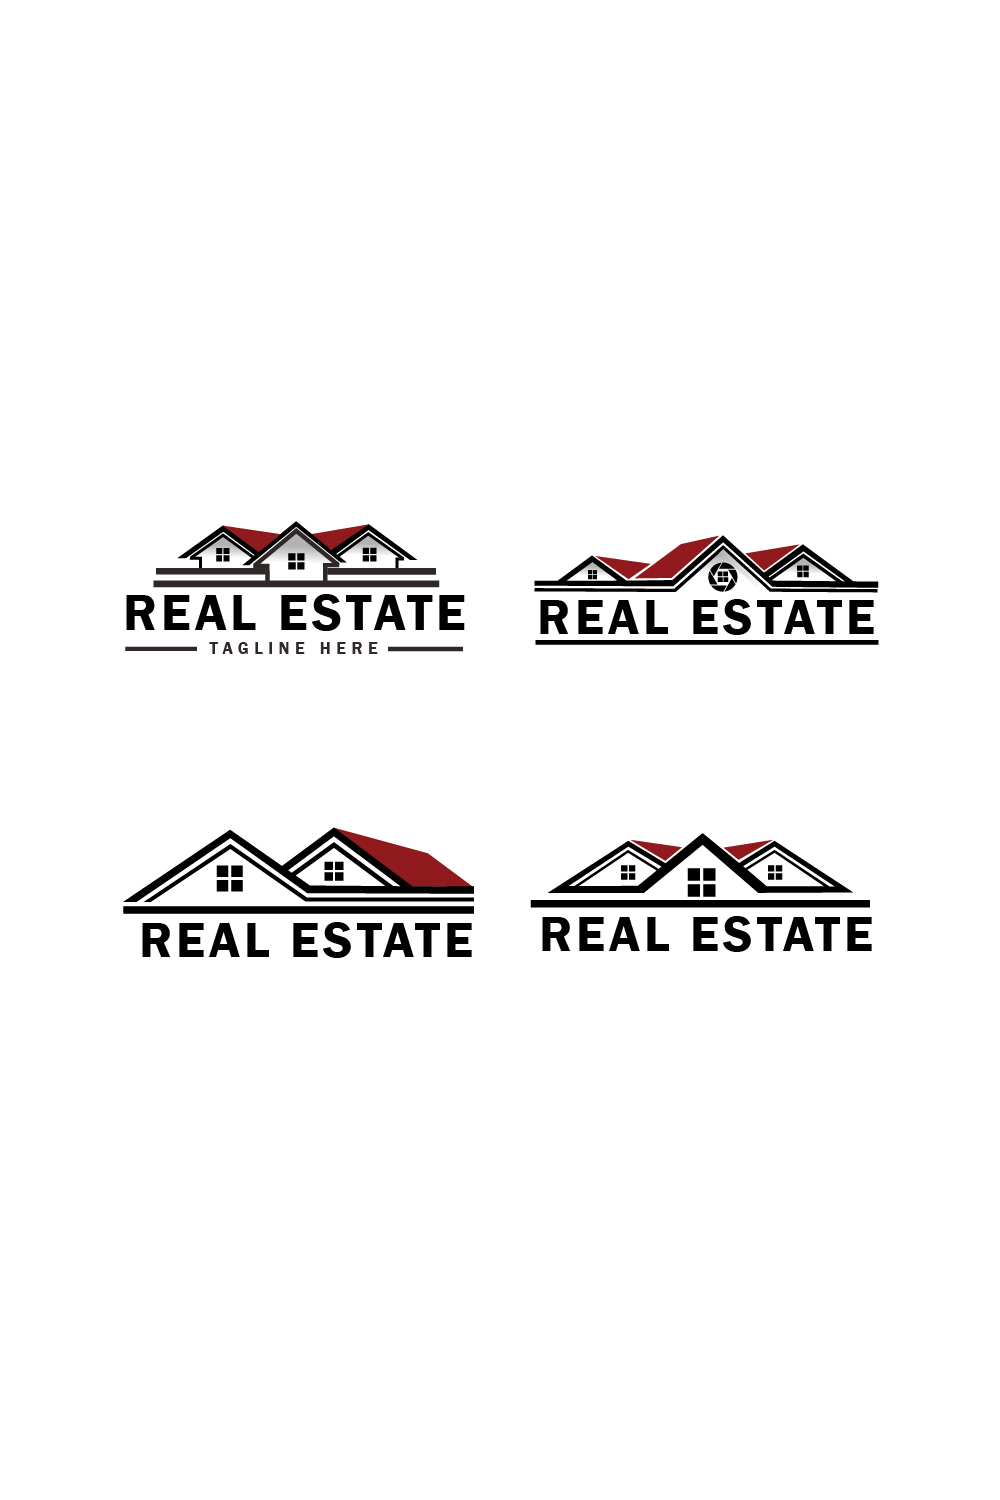 Set Real Estate Logo pinterest preview image.